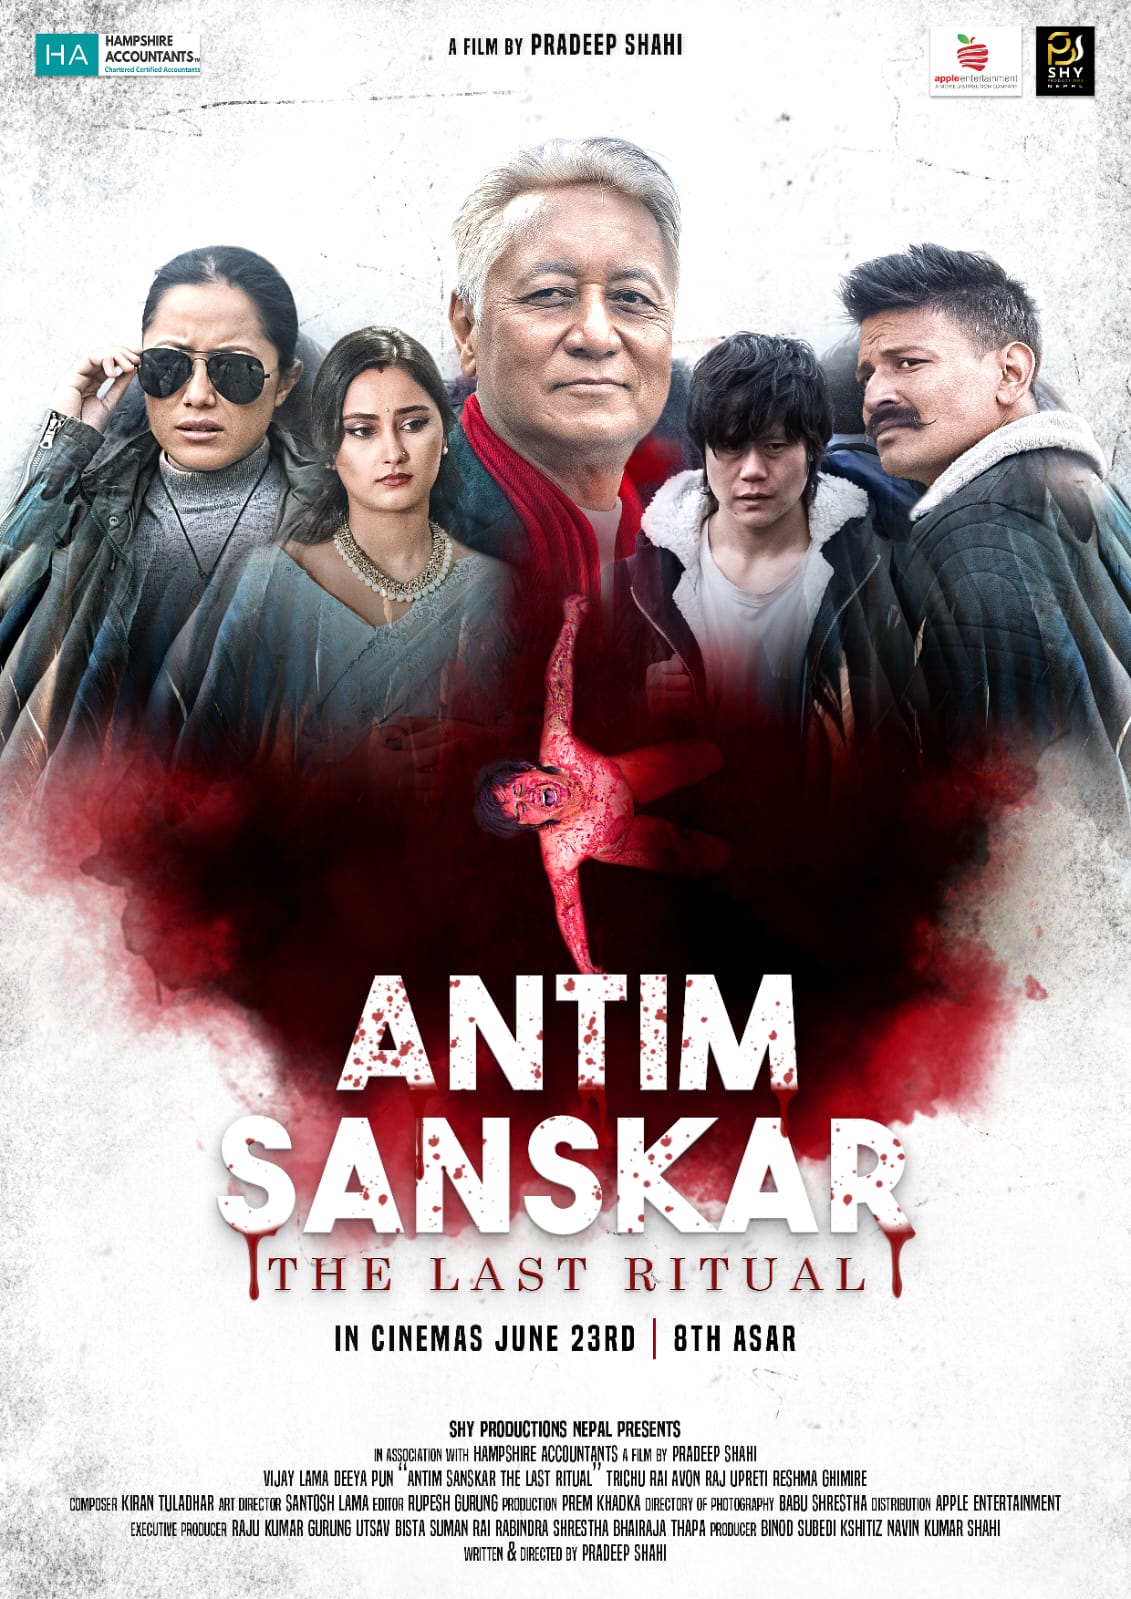 Antim Sanskar " The Last Rituals"